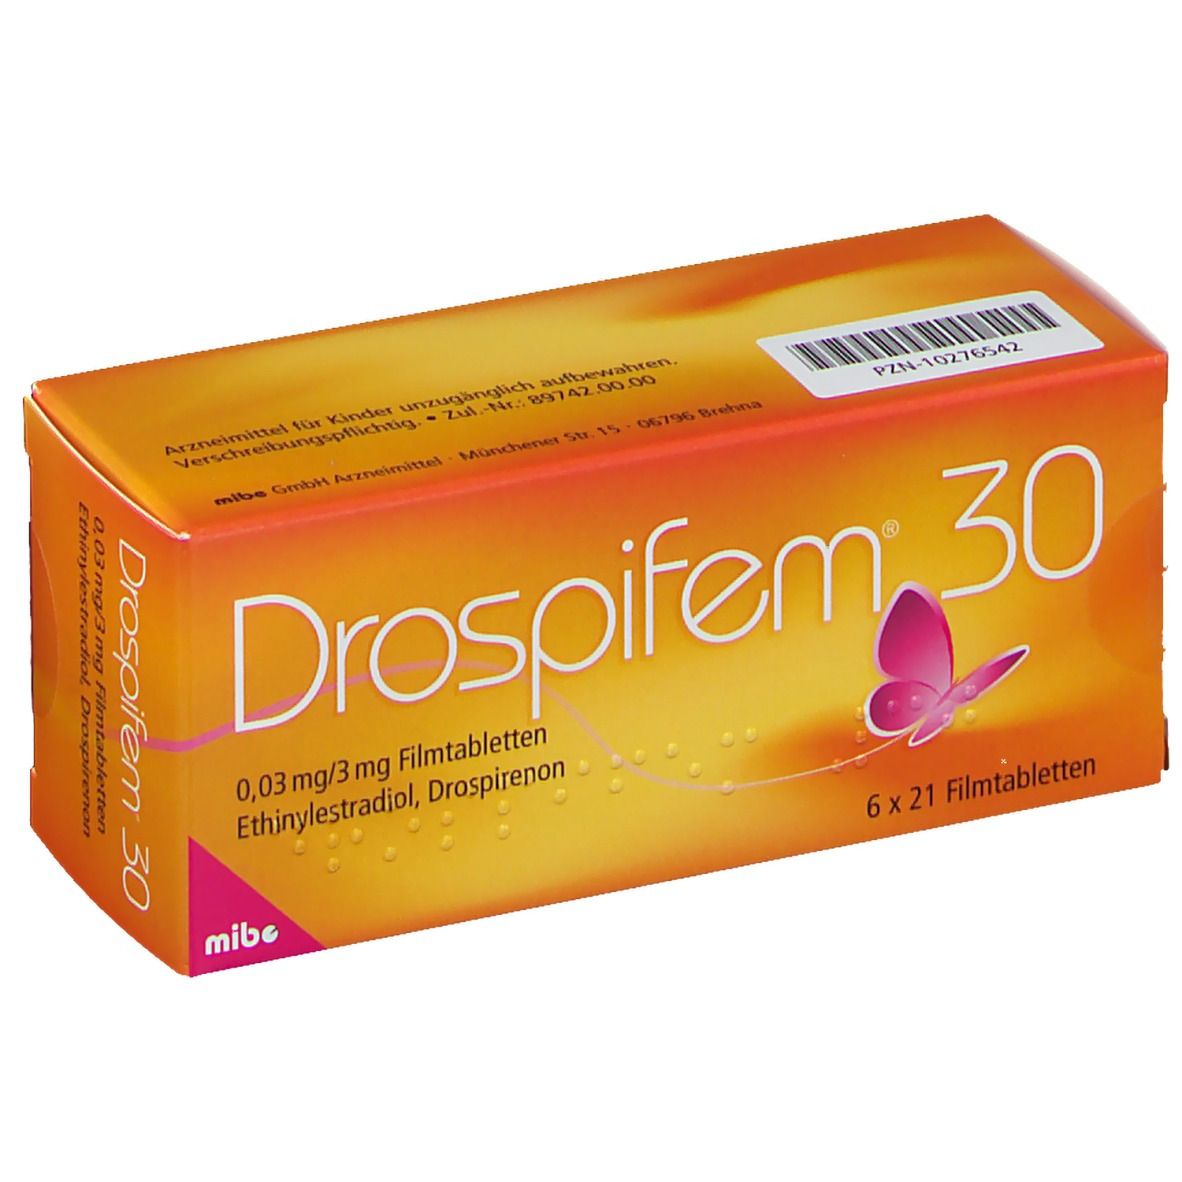 Drospifem 30 0,03 mg/3 mg